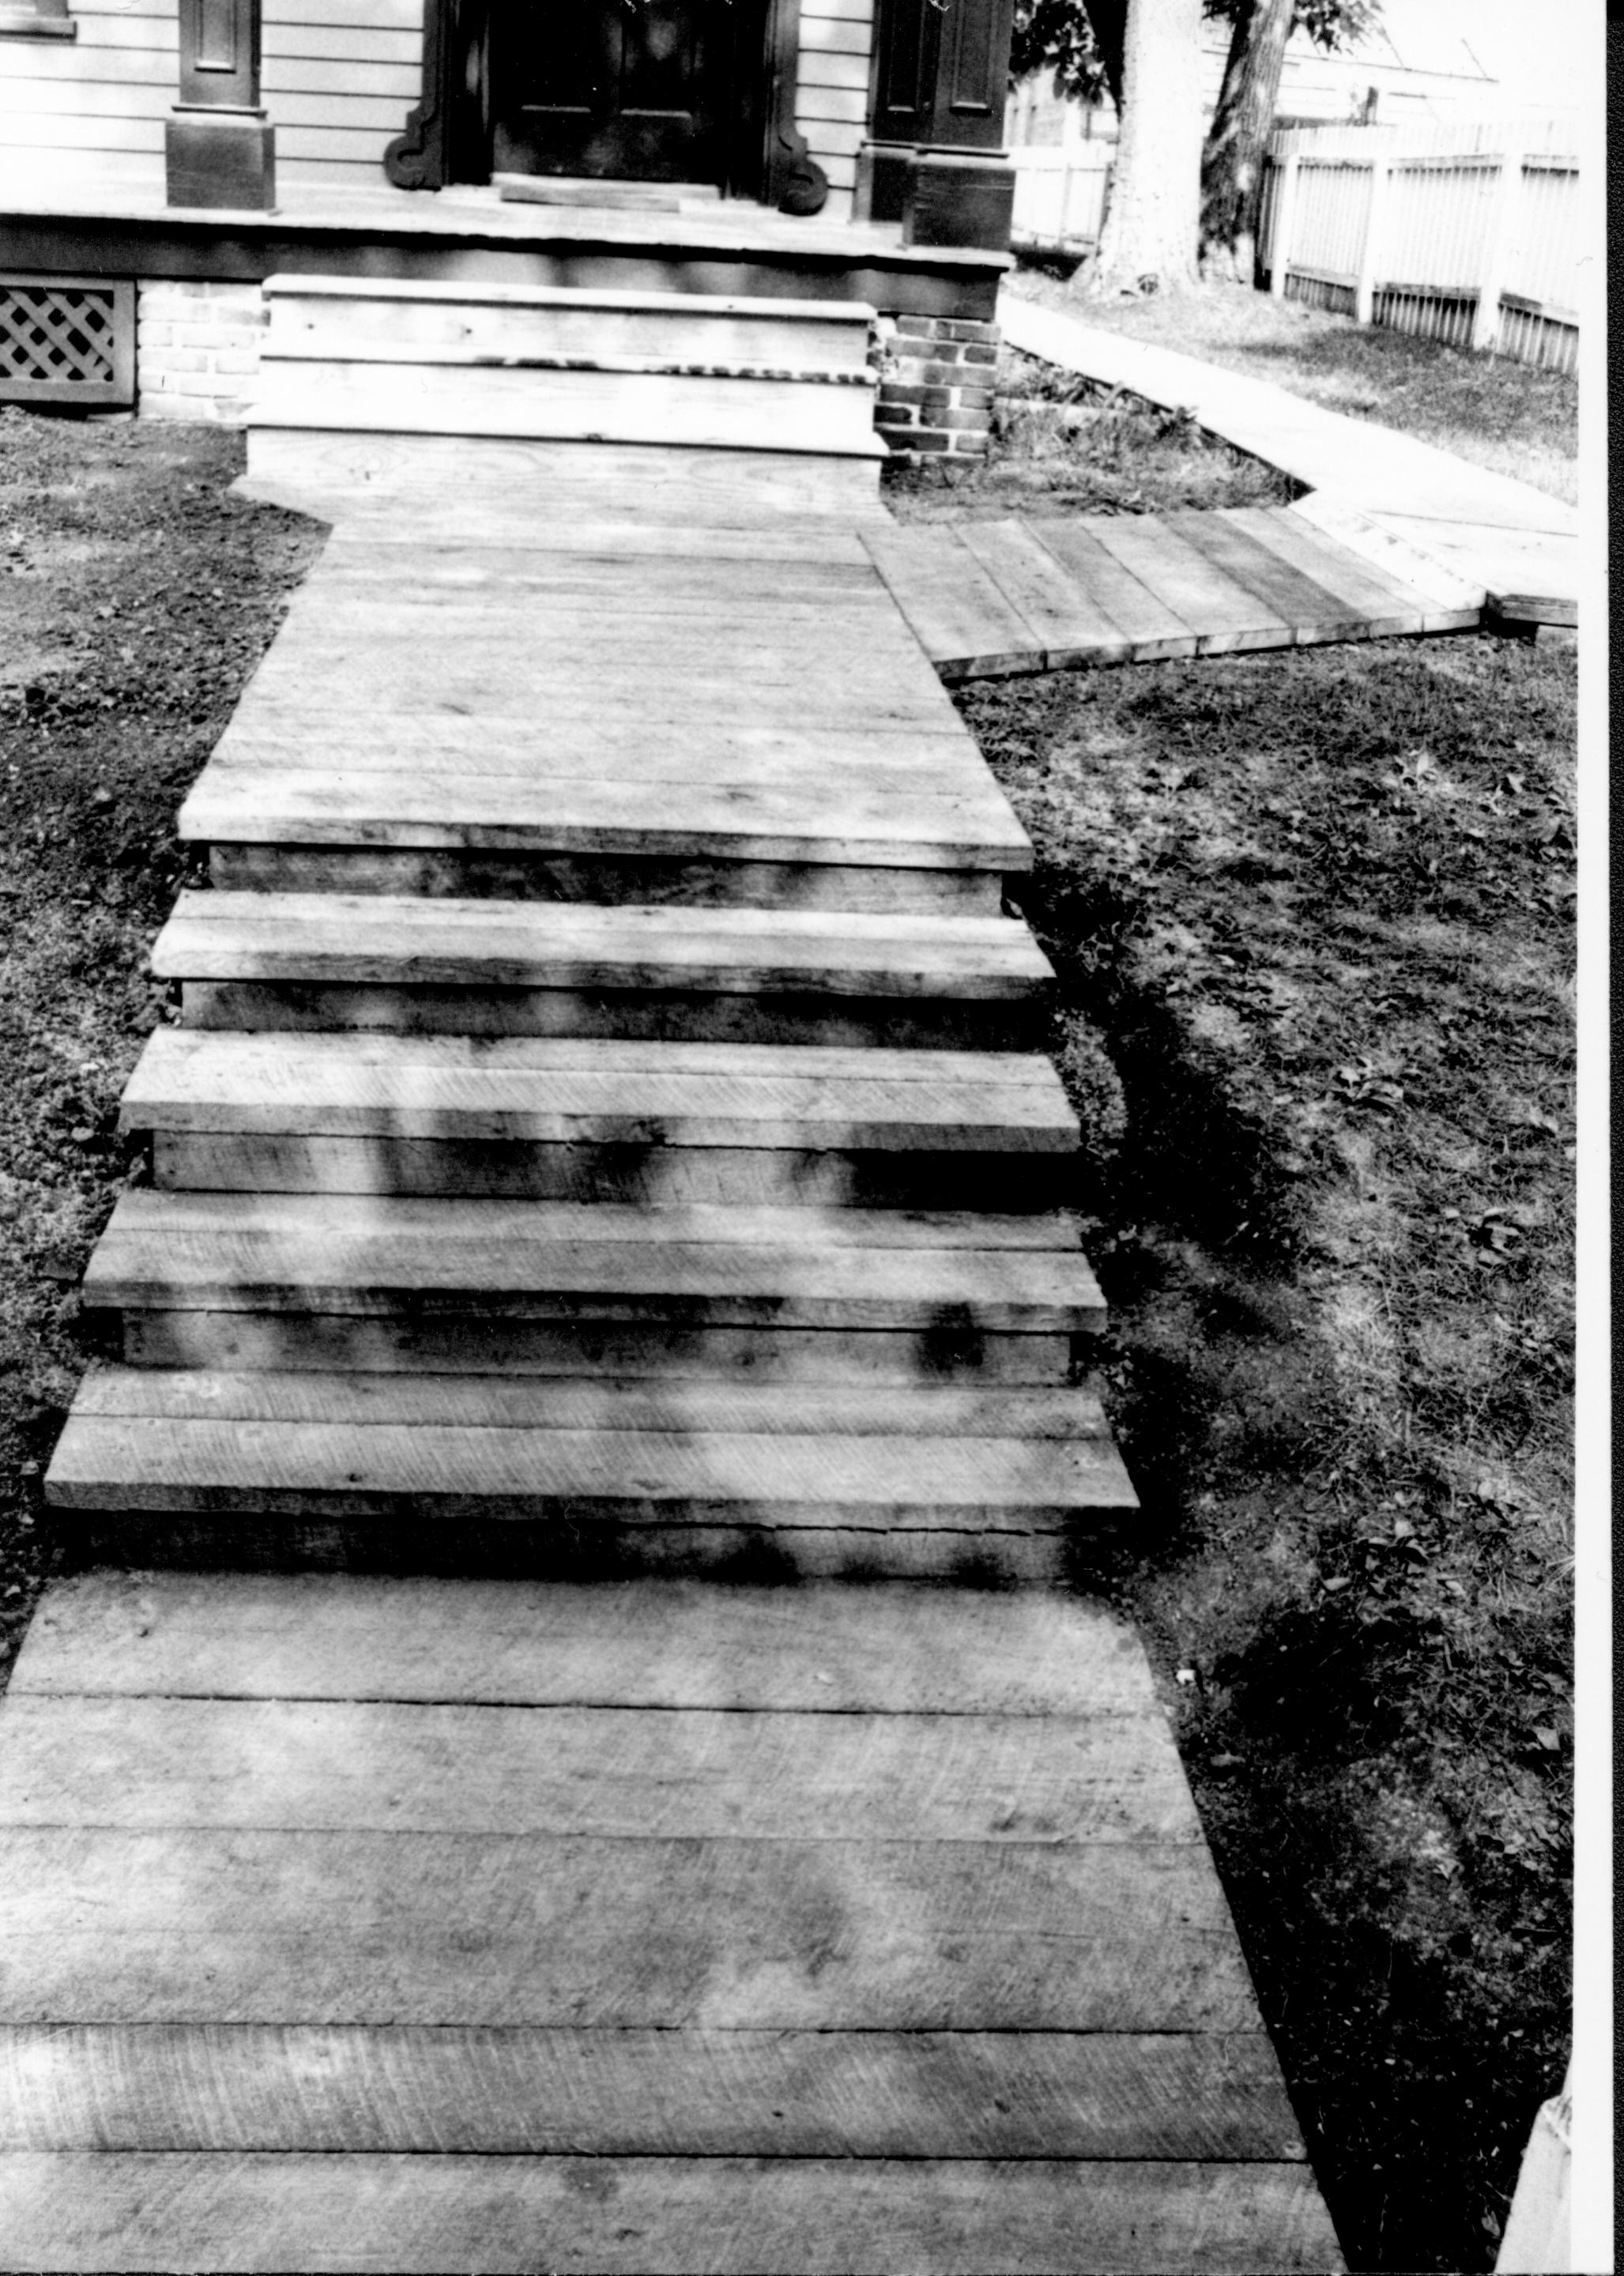 New front steps and boardwalk 17 Beedle, Steps, Boardwalk